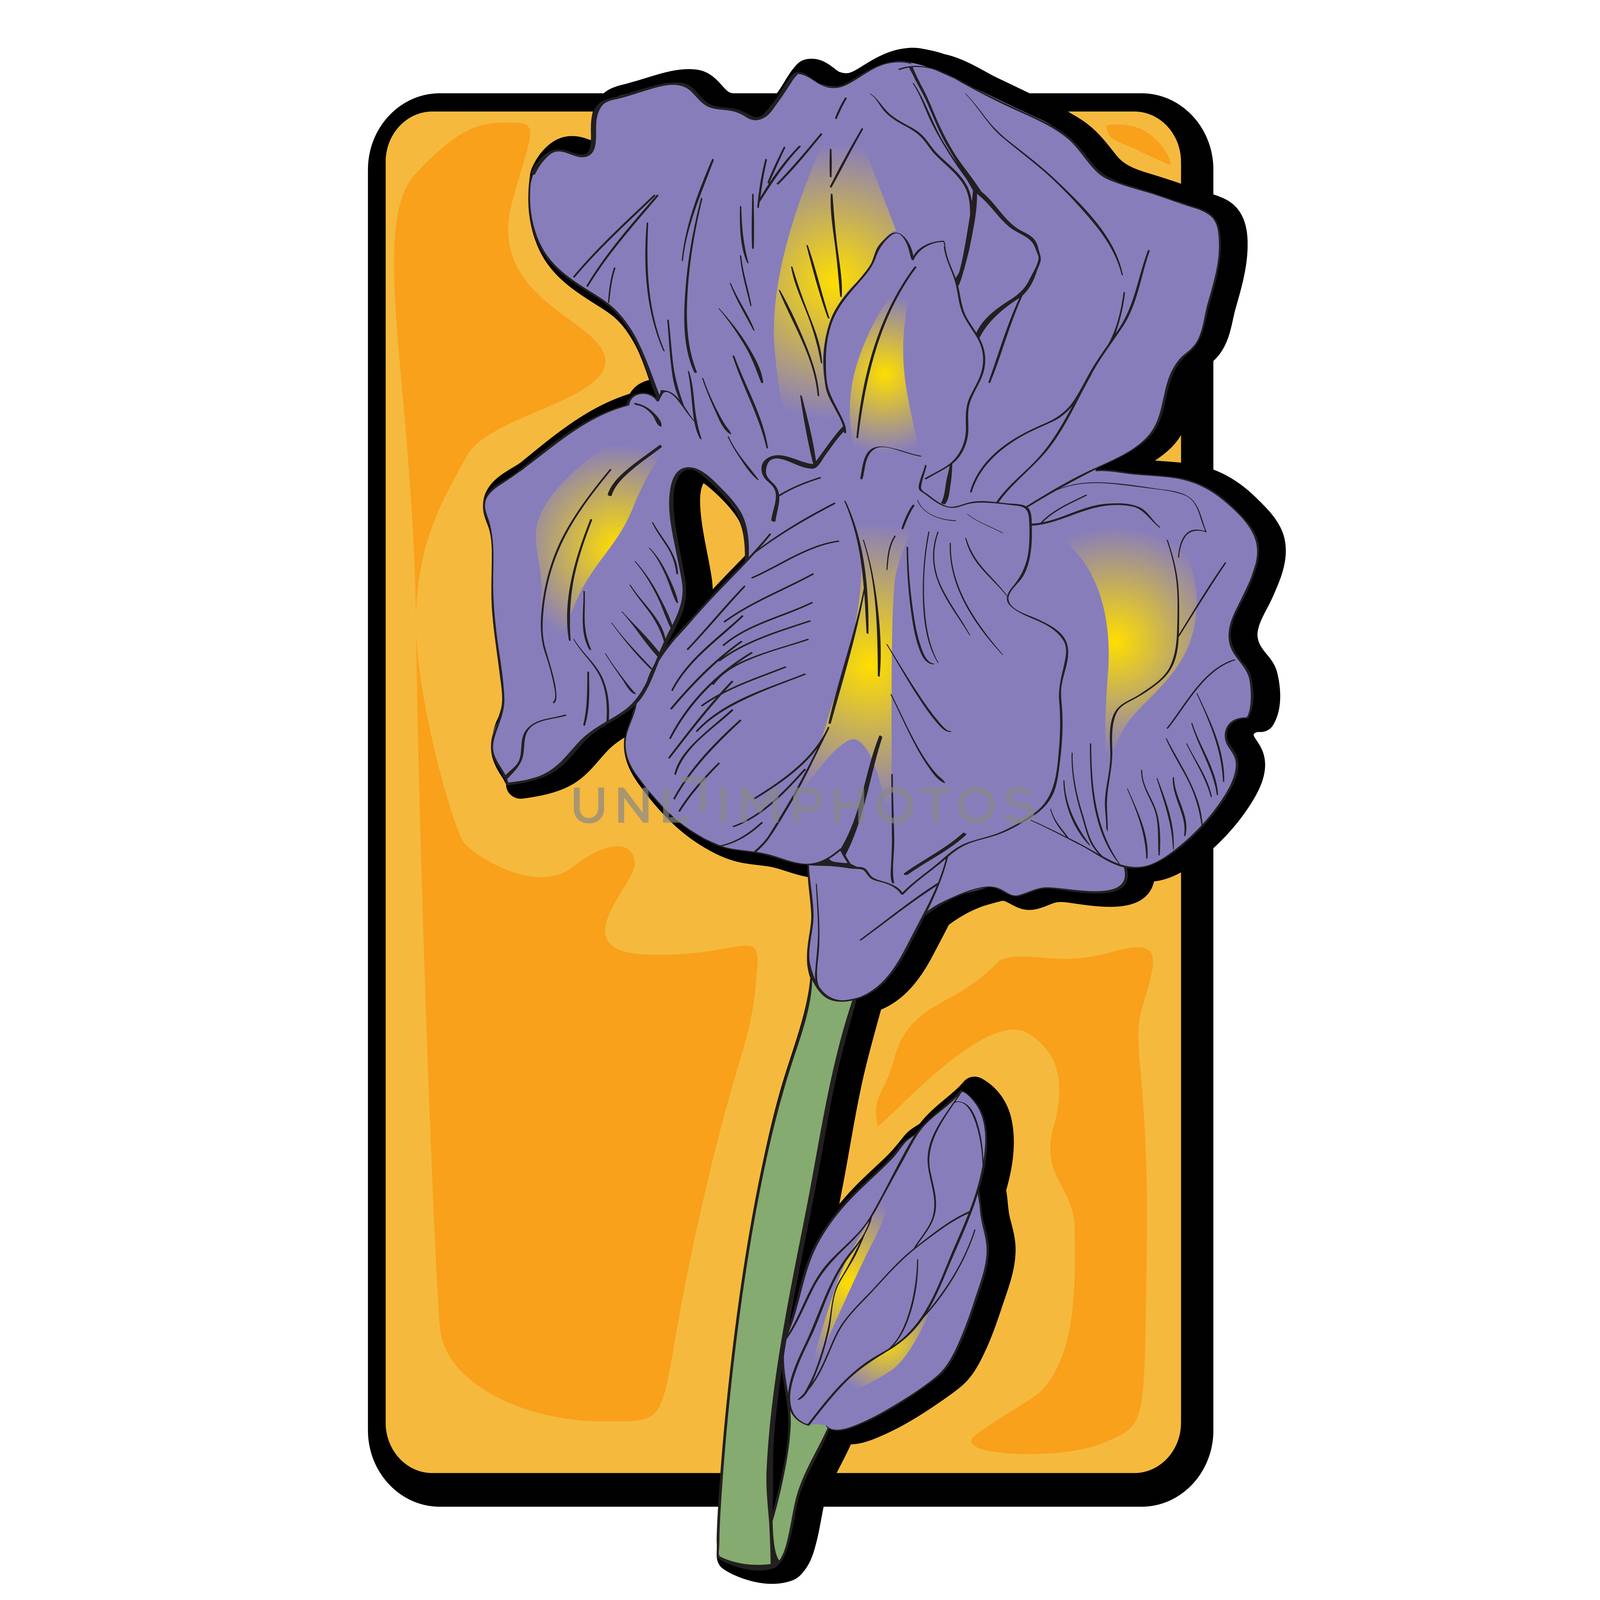 Iris flower clip art, hand drawn cartoon illustration isolated on white